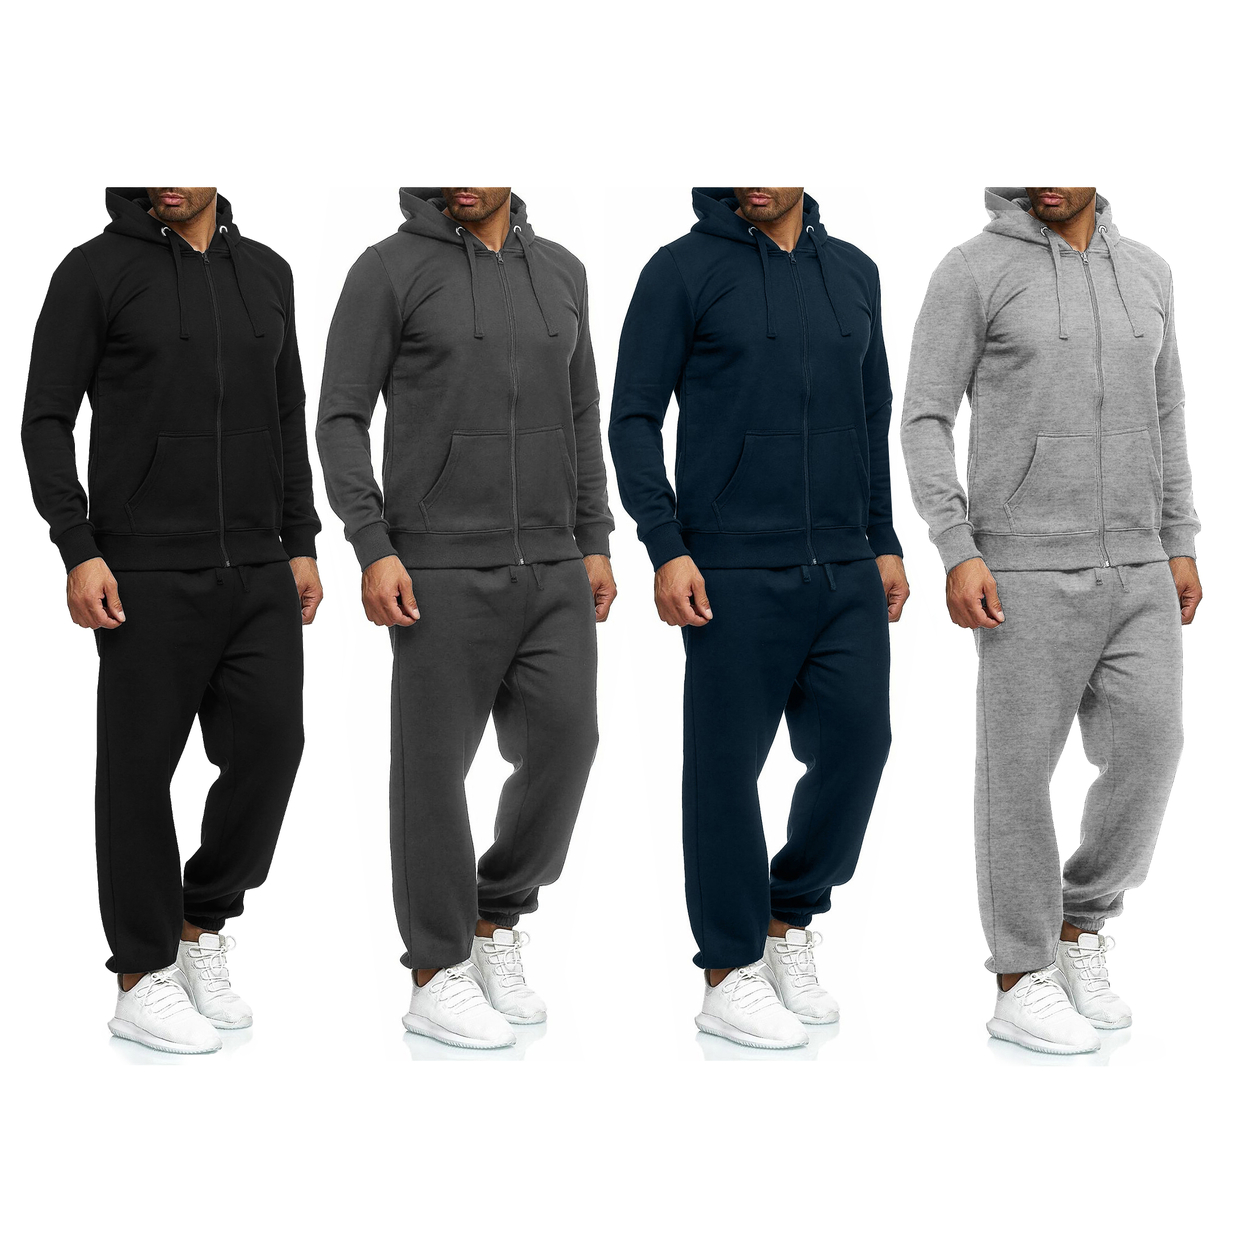 2-Pack: Men's Casual Big & Tall Athletic Active Winter Warm Fleece Lined Full Zip Tracksuit Jogger Set - Grey, Medium